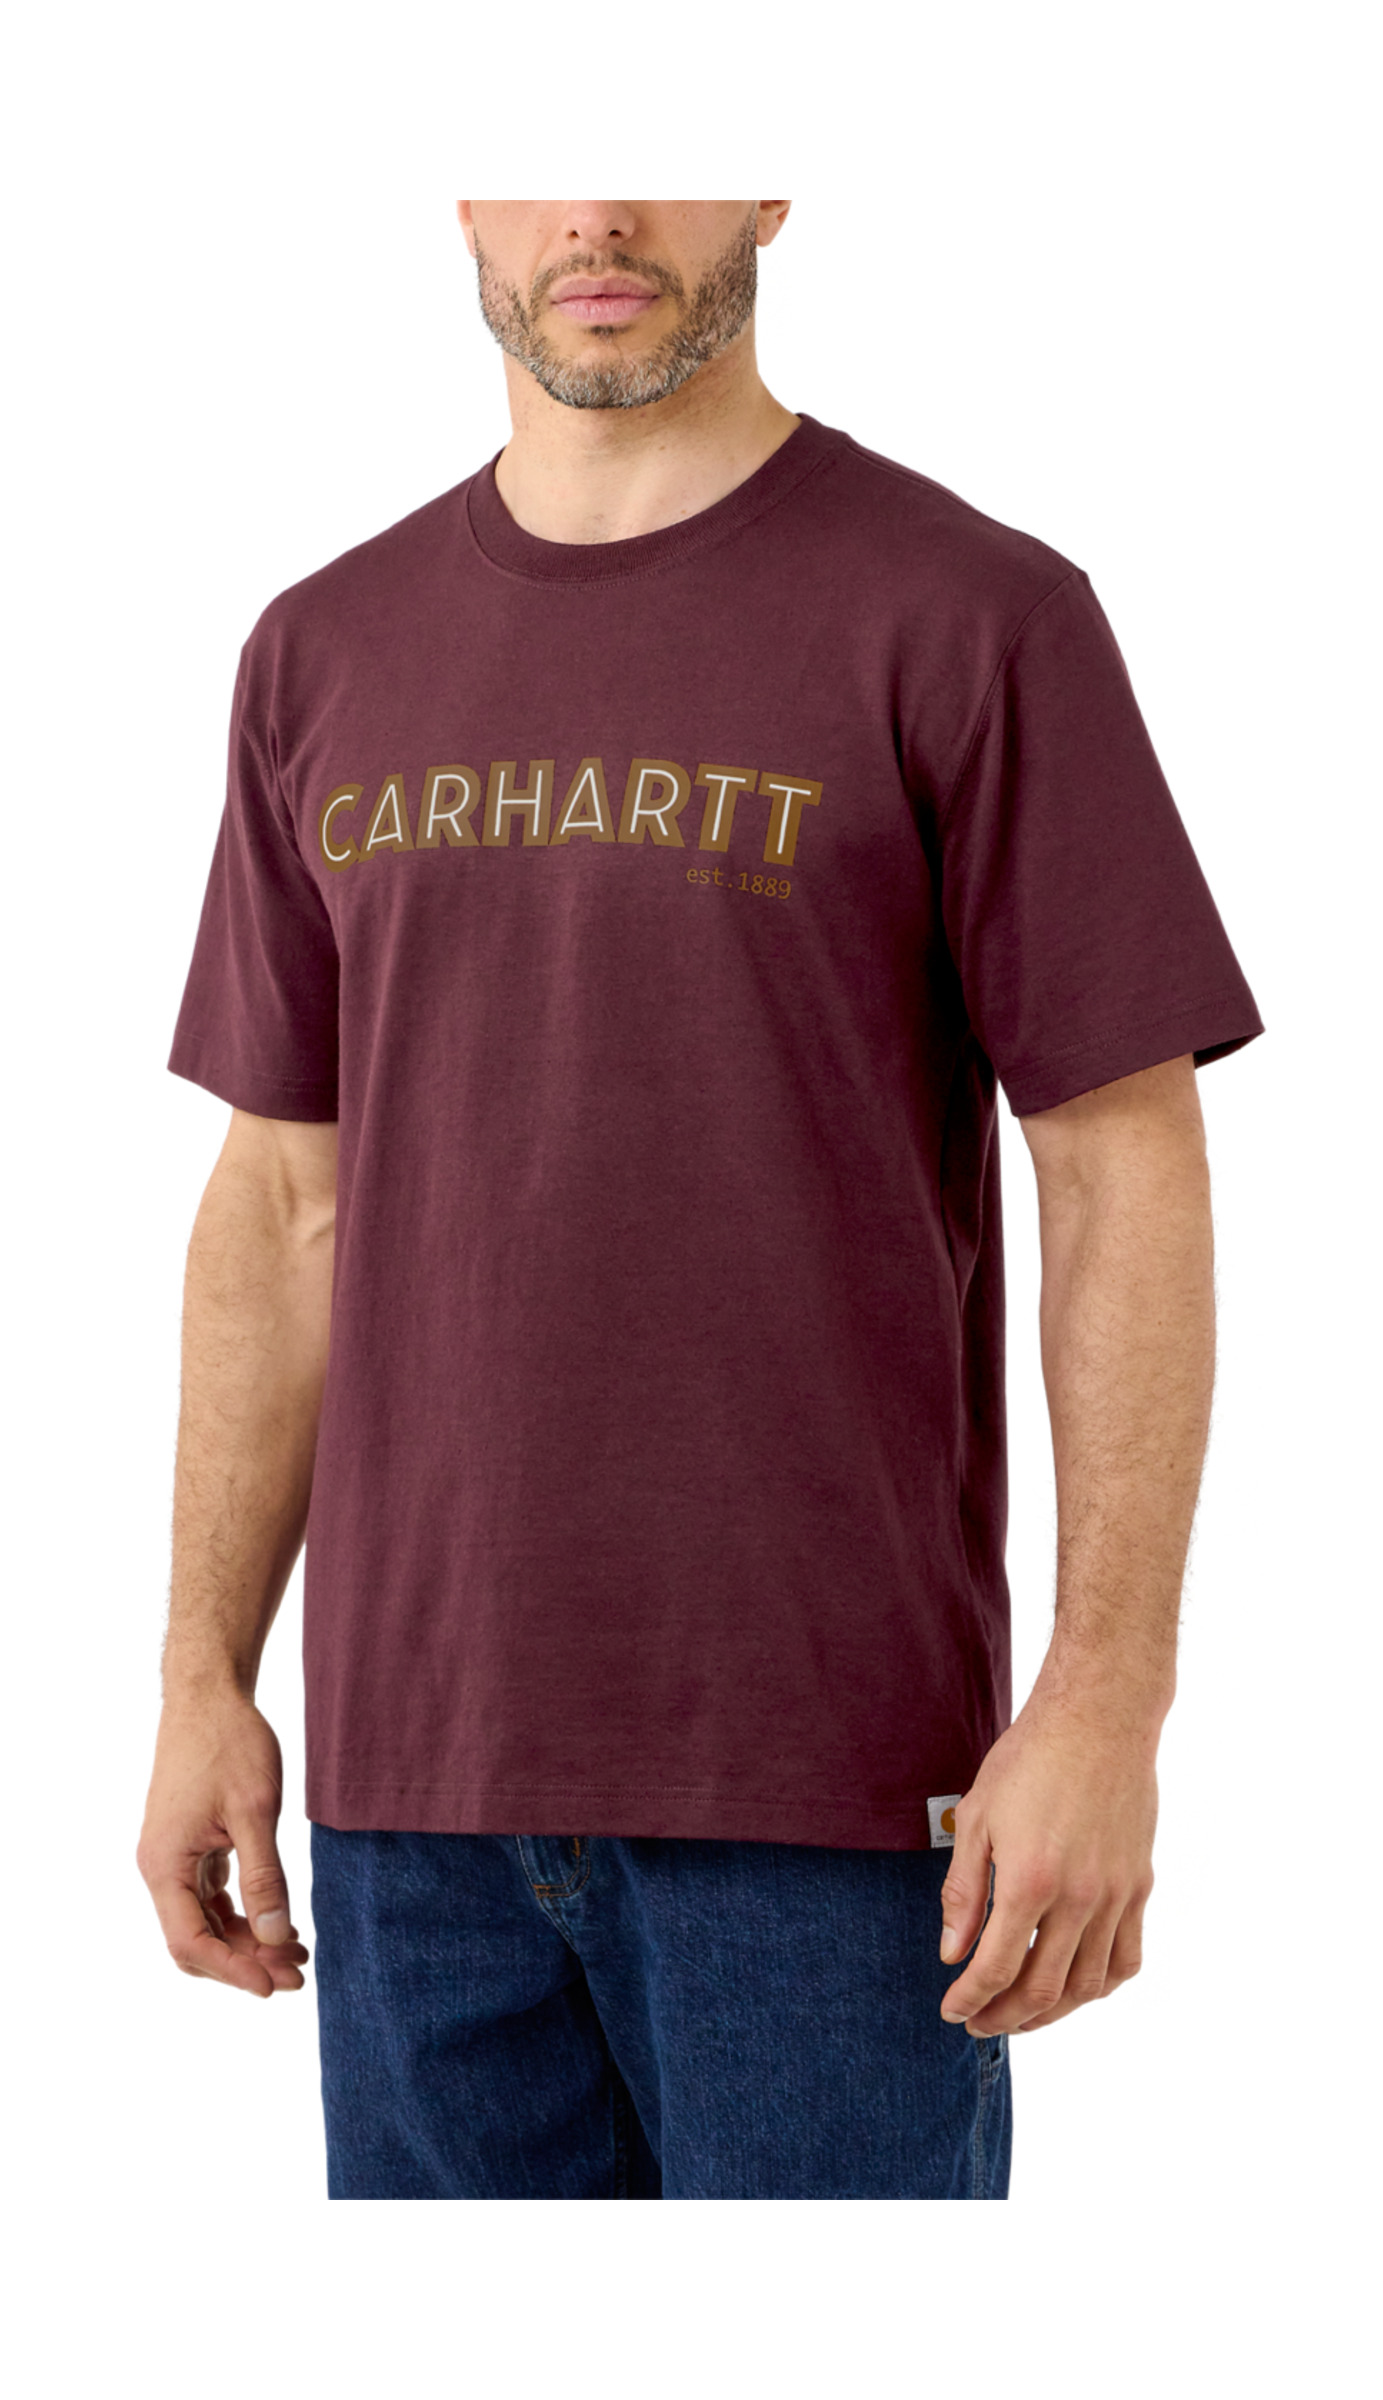 Carhartt LOGO GRAPHIC S/S T-SHIRT